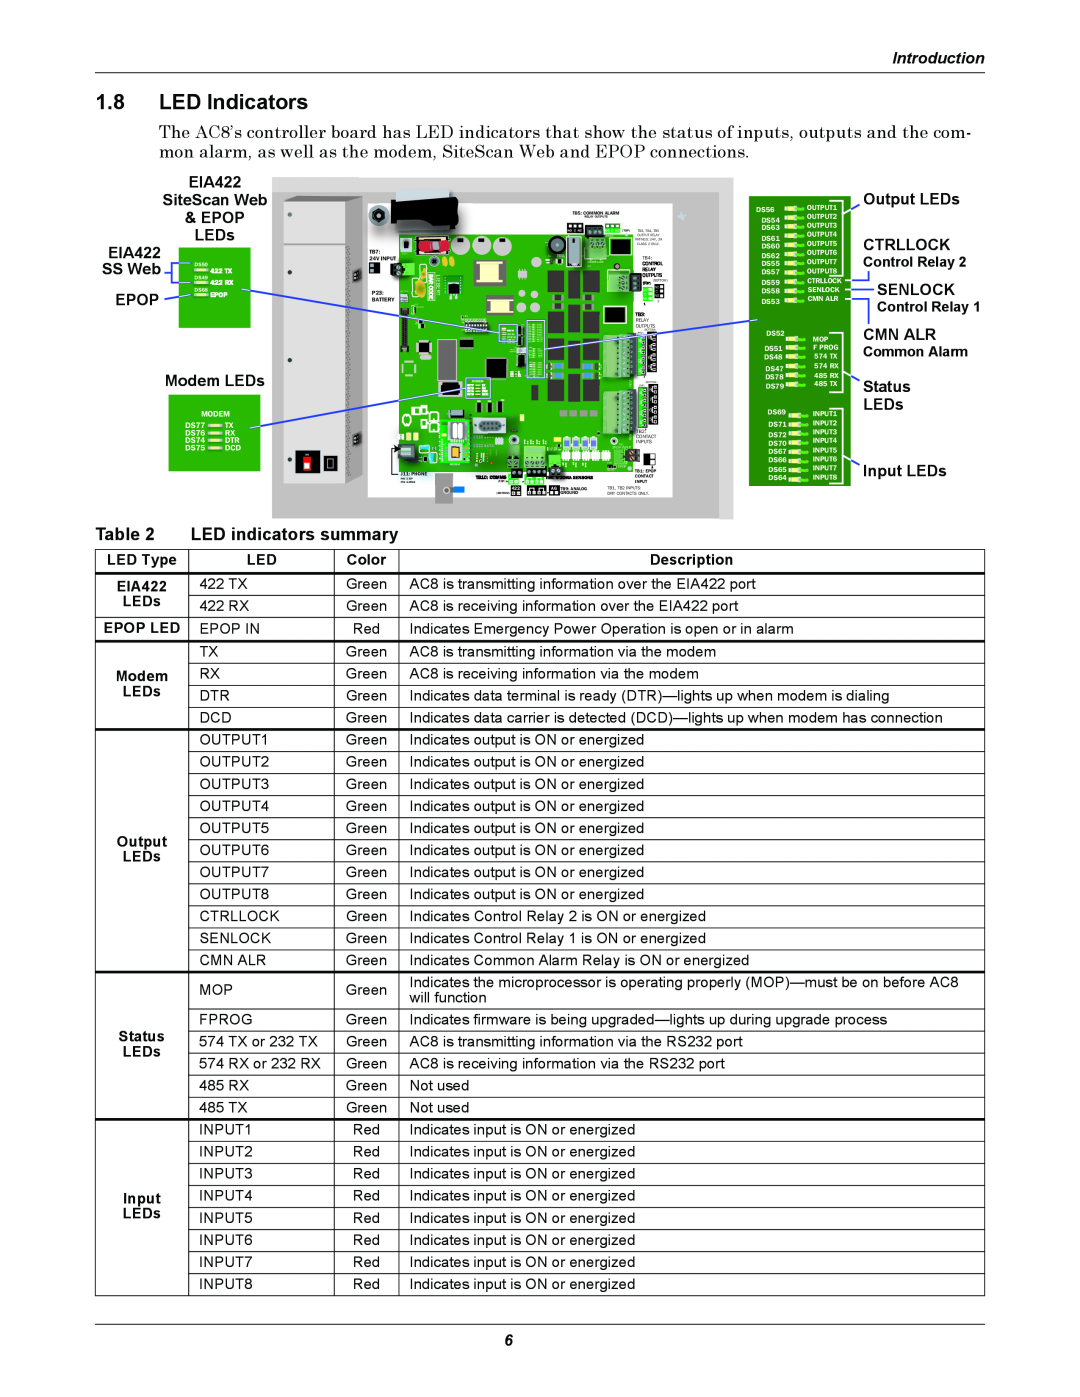 Emerson AC8 user manual 1.8LED Indicators, Table, LED indicators summary, Introduction 